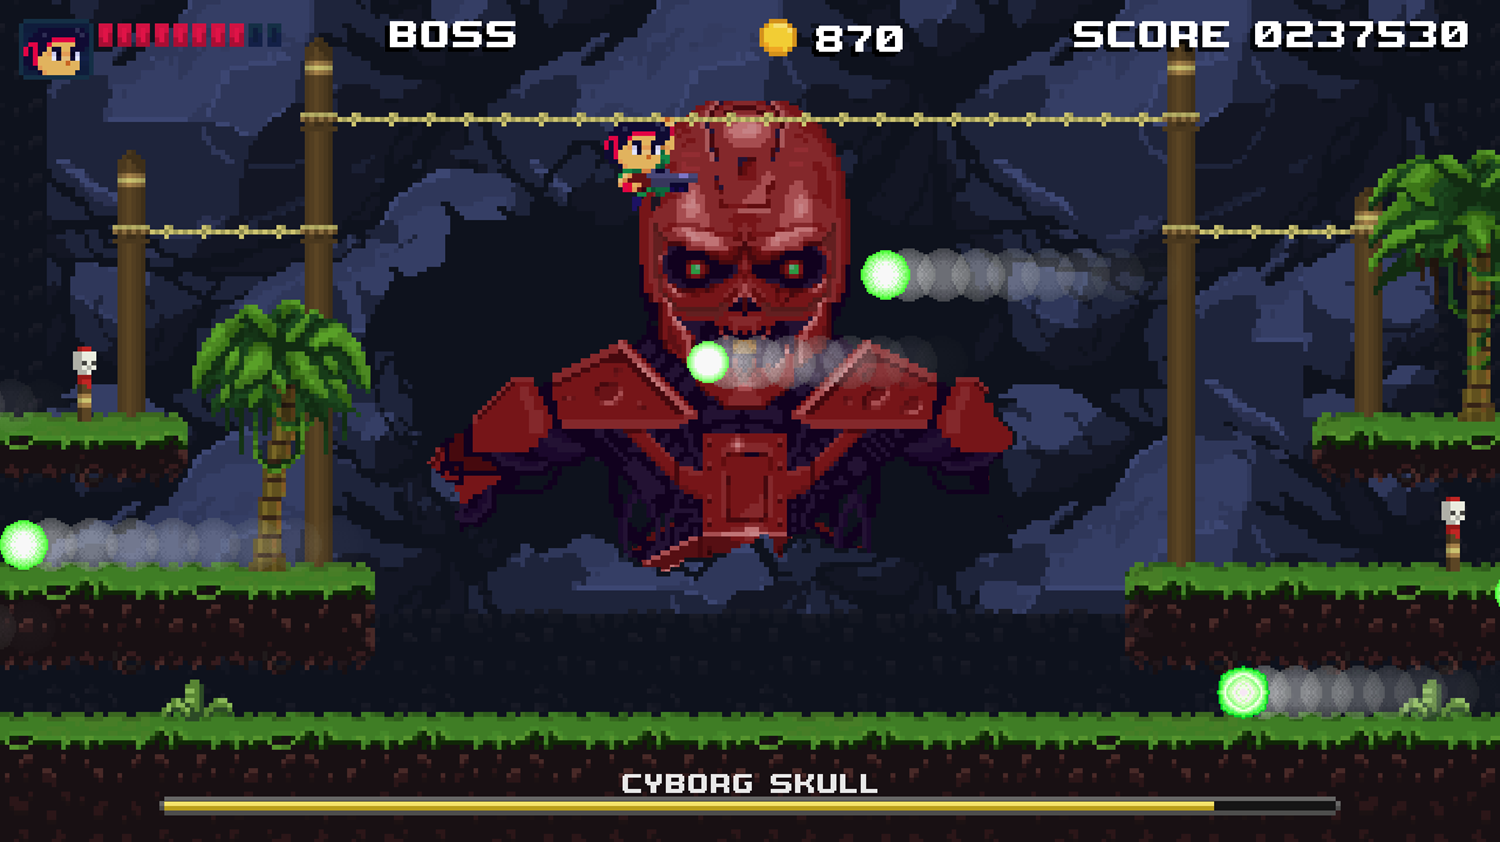 Brave Soldier Invasion of Cyborgs Game Cyborg Skull Green Attack Screenshot.